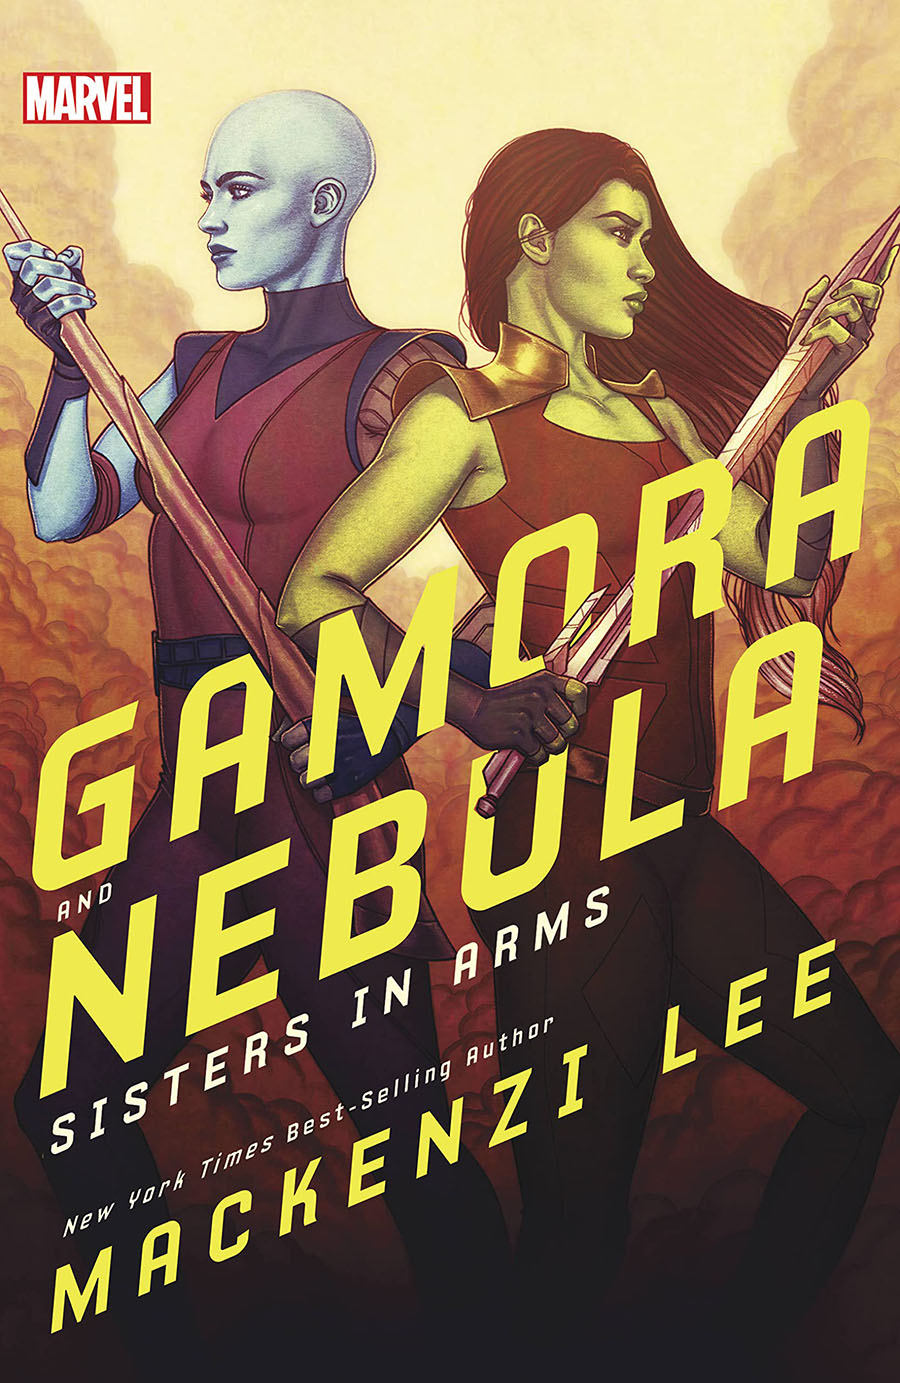 Marvel Rebels & Renegades Gamora And Nebula Sisters In Arms Novel SC